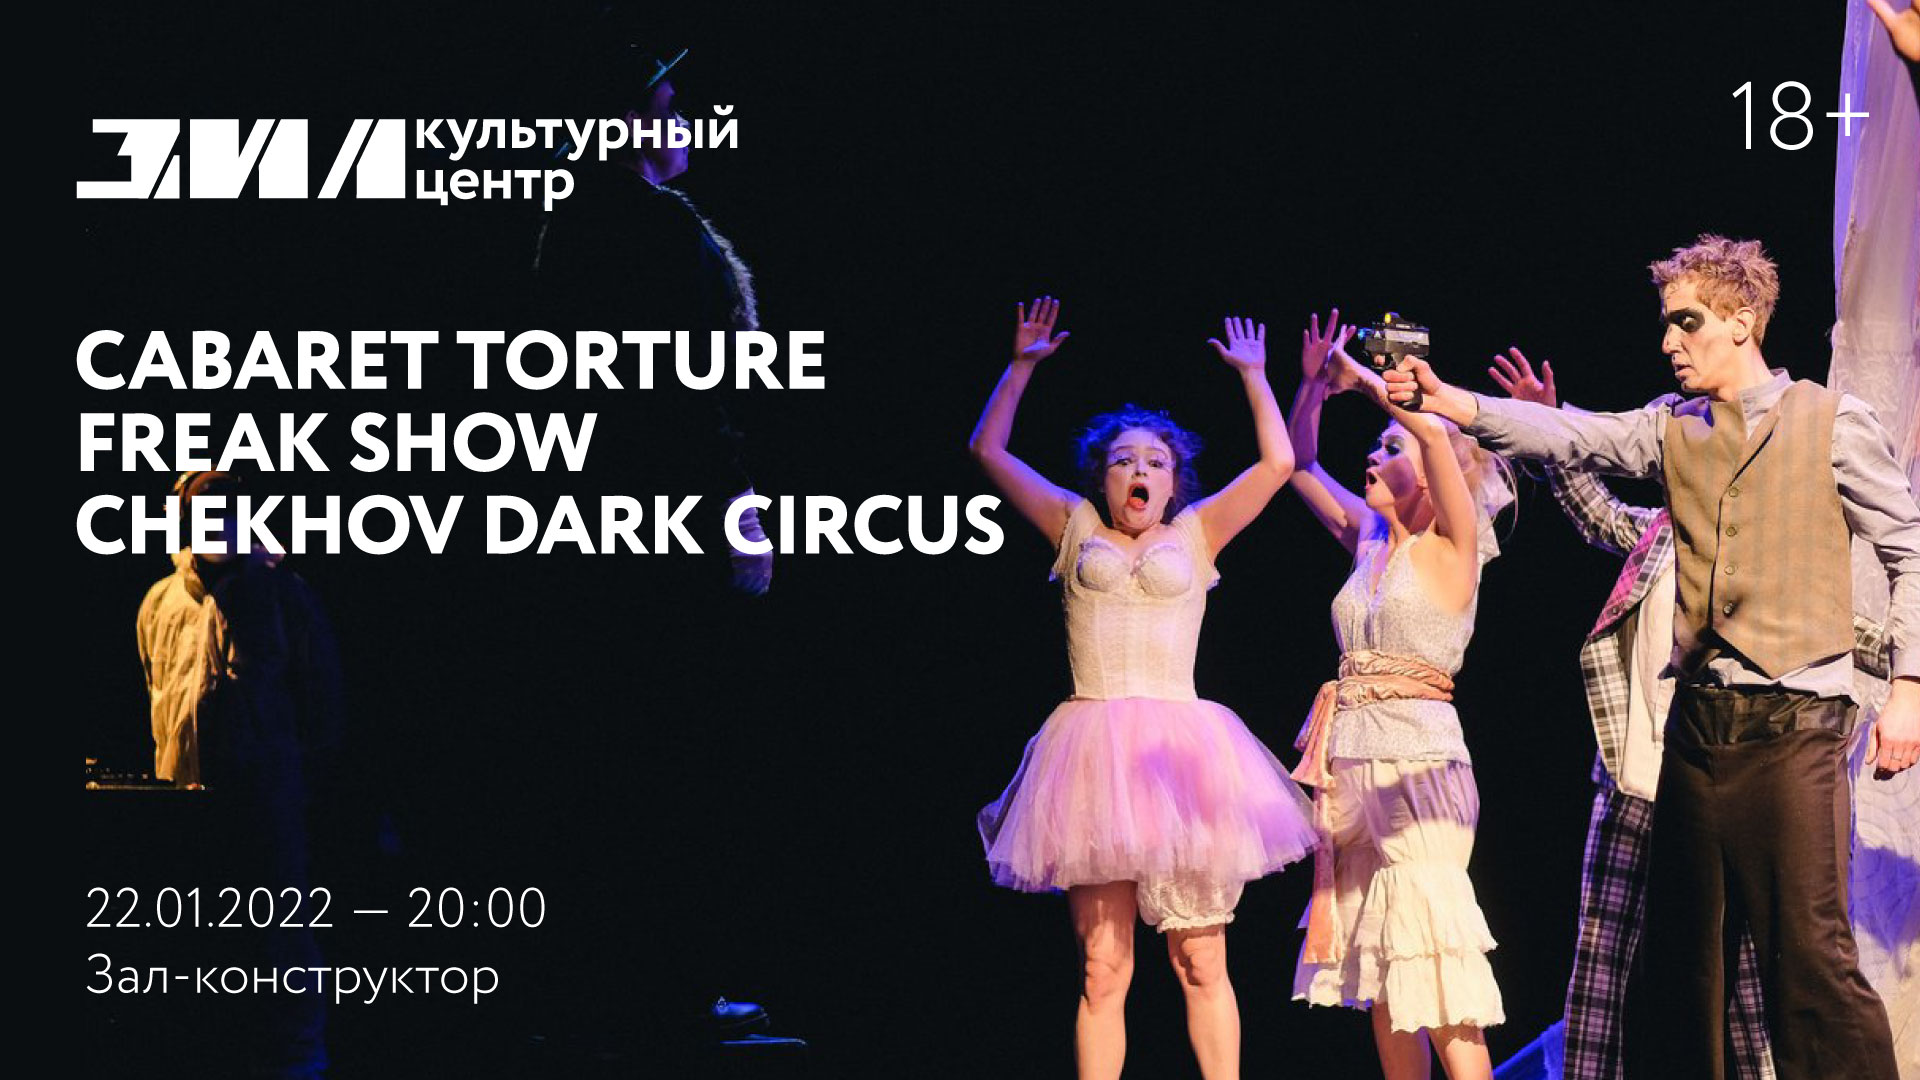 Cabaret Torture Freak Show Chekhov Dark Circus